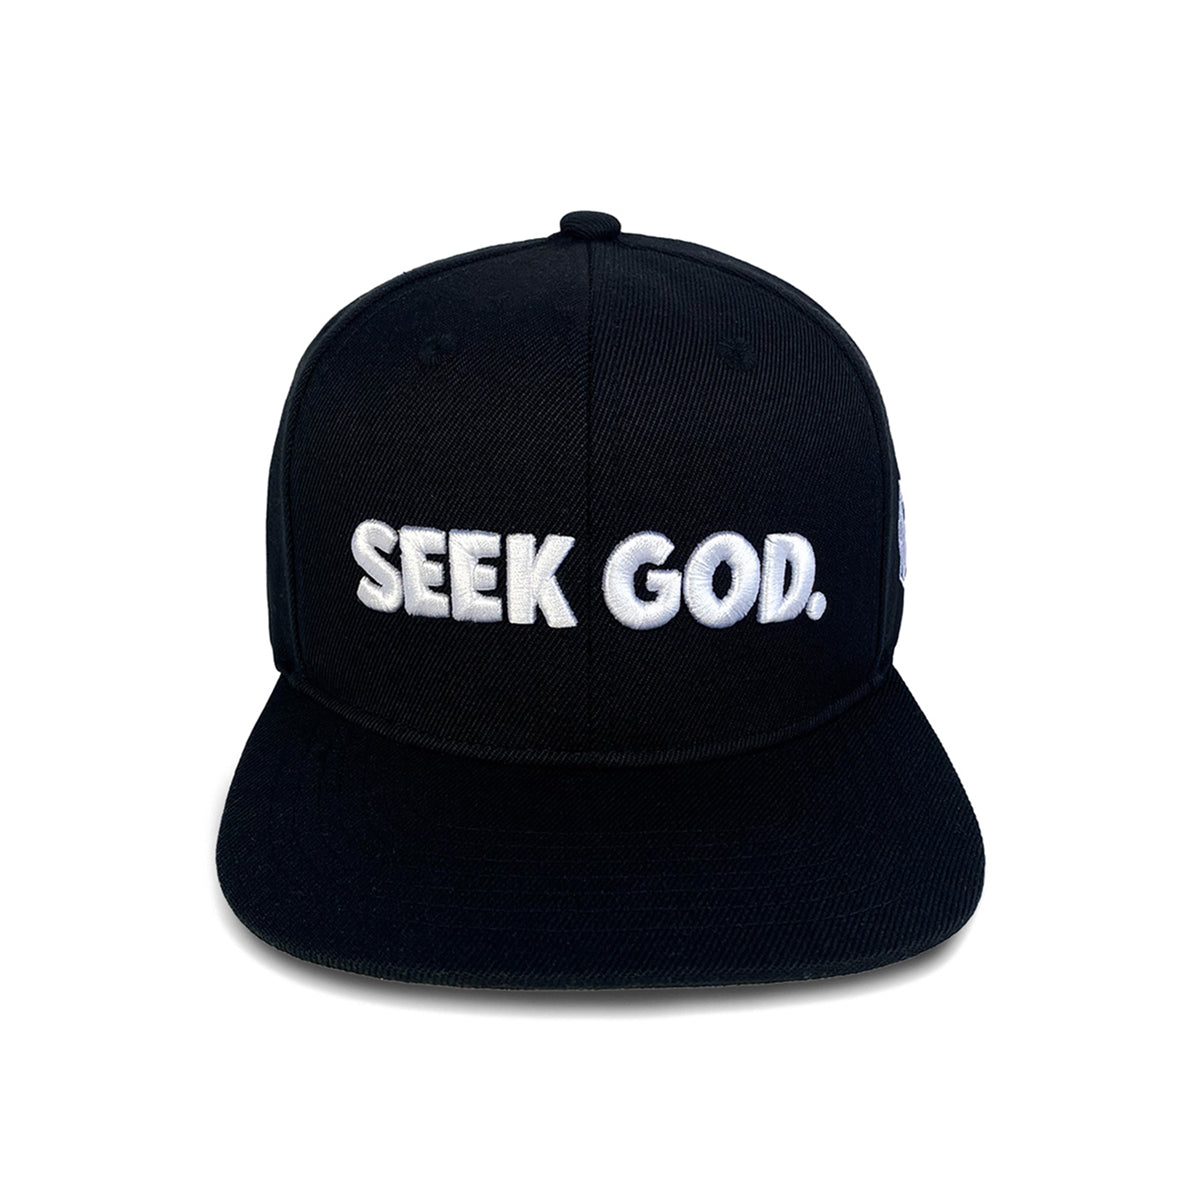 SEEK GOD SNAPBACK - BLACK